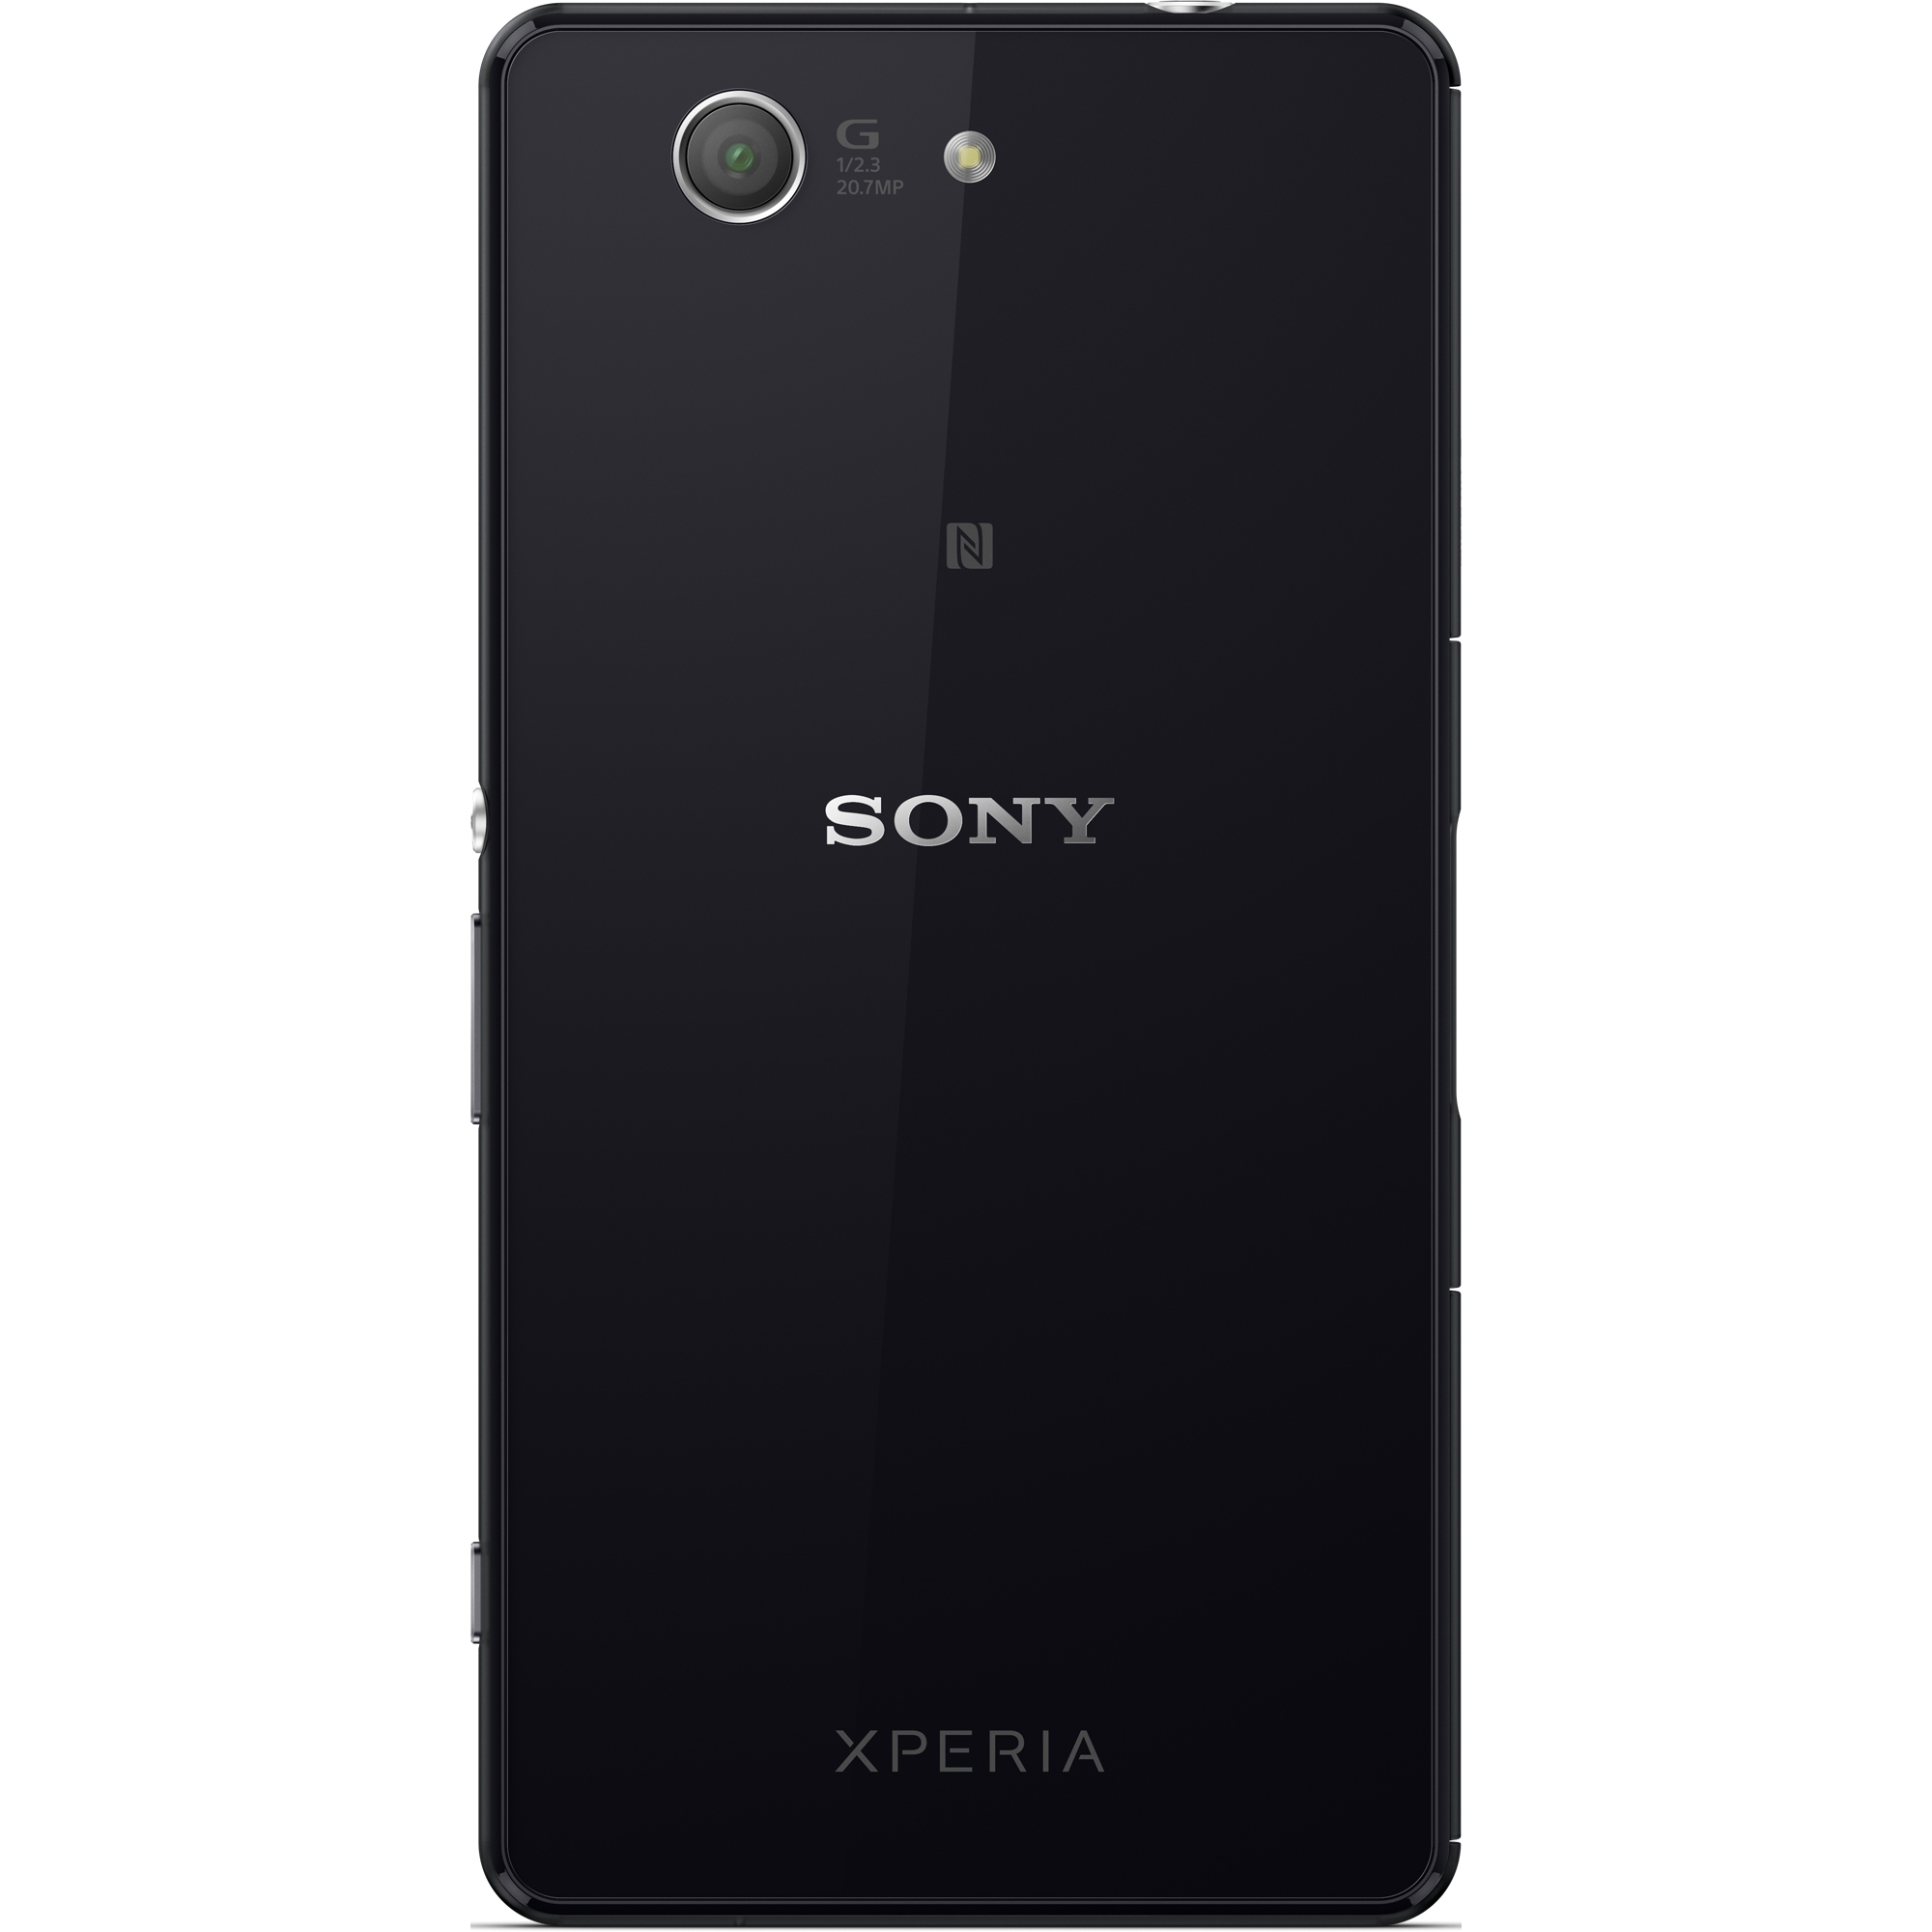 Xperia все модели. Смартфон Sony Xperia z3 Compact. Sony Xperia d2302. Sony Xperia m2. Sony Xperia m2 Dual.